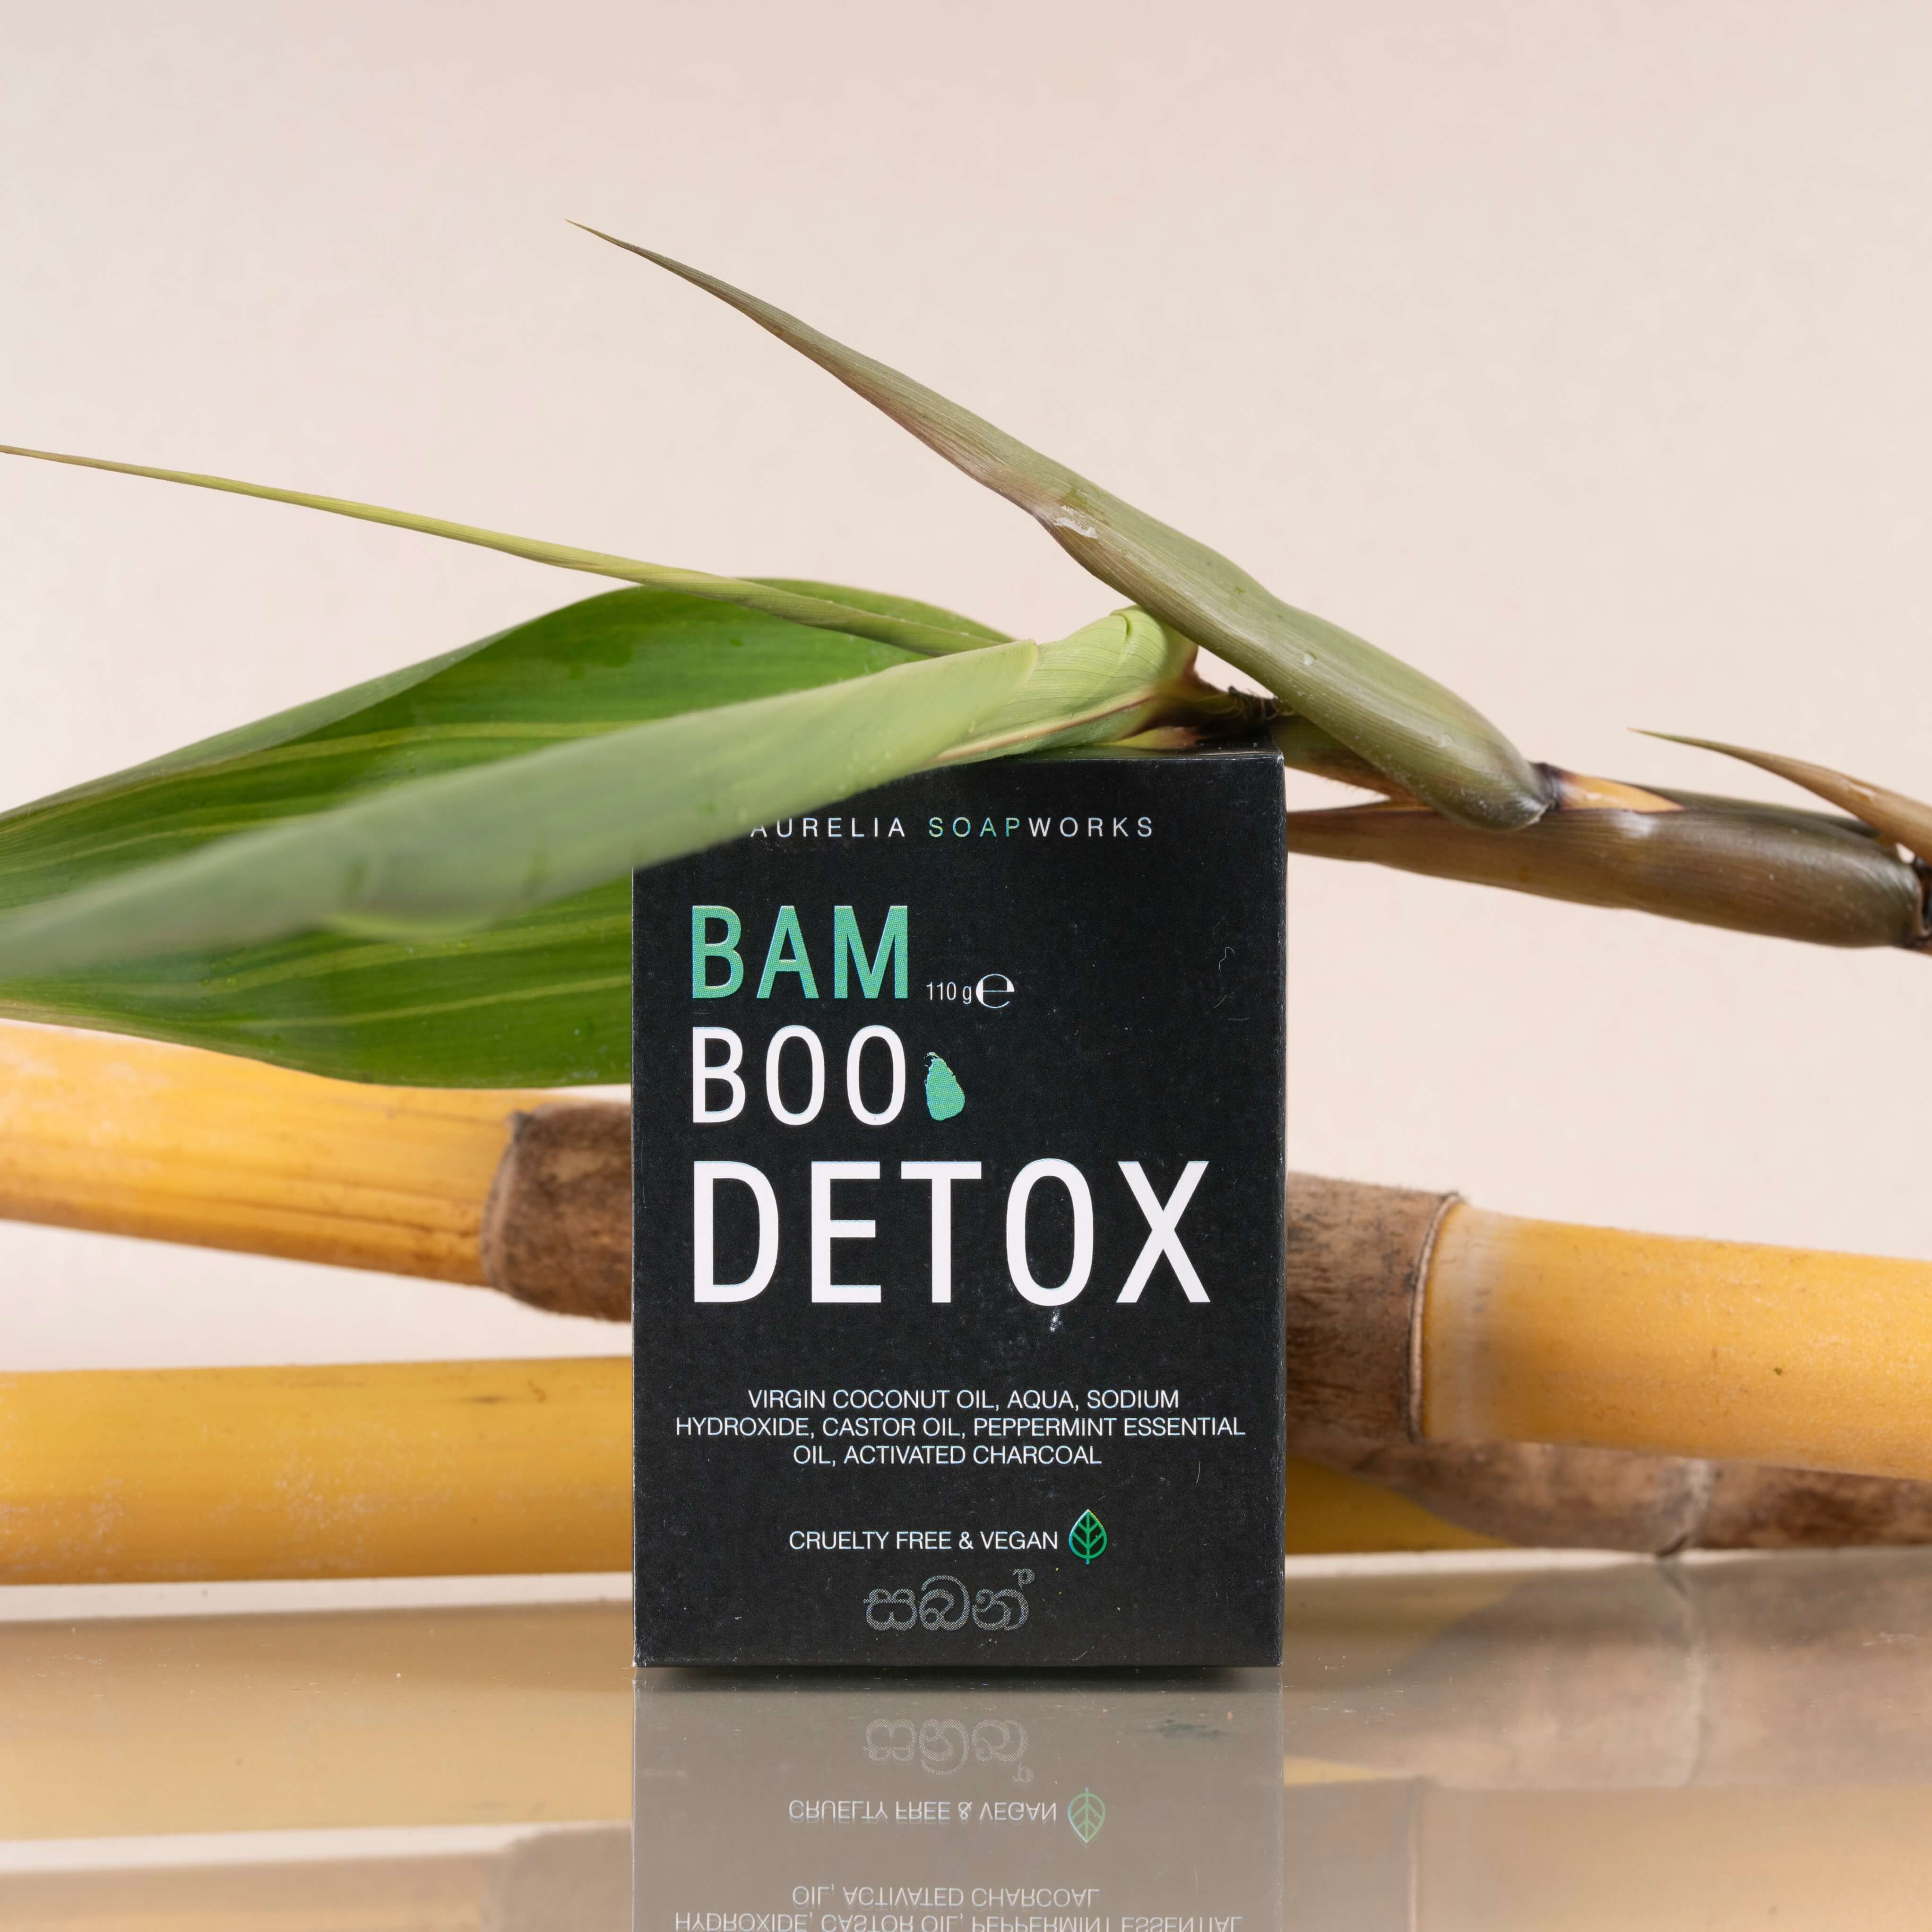 Bamboo detox bath soap